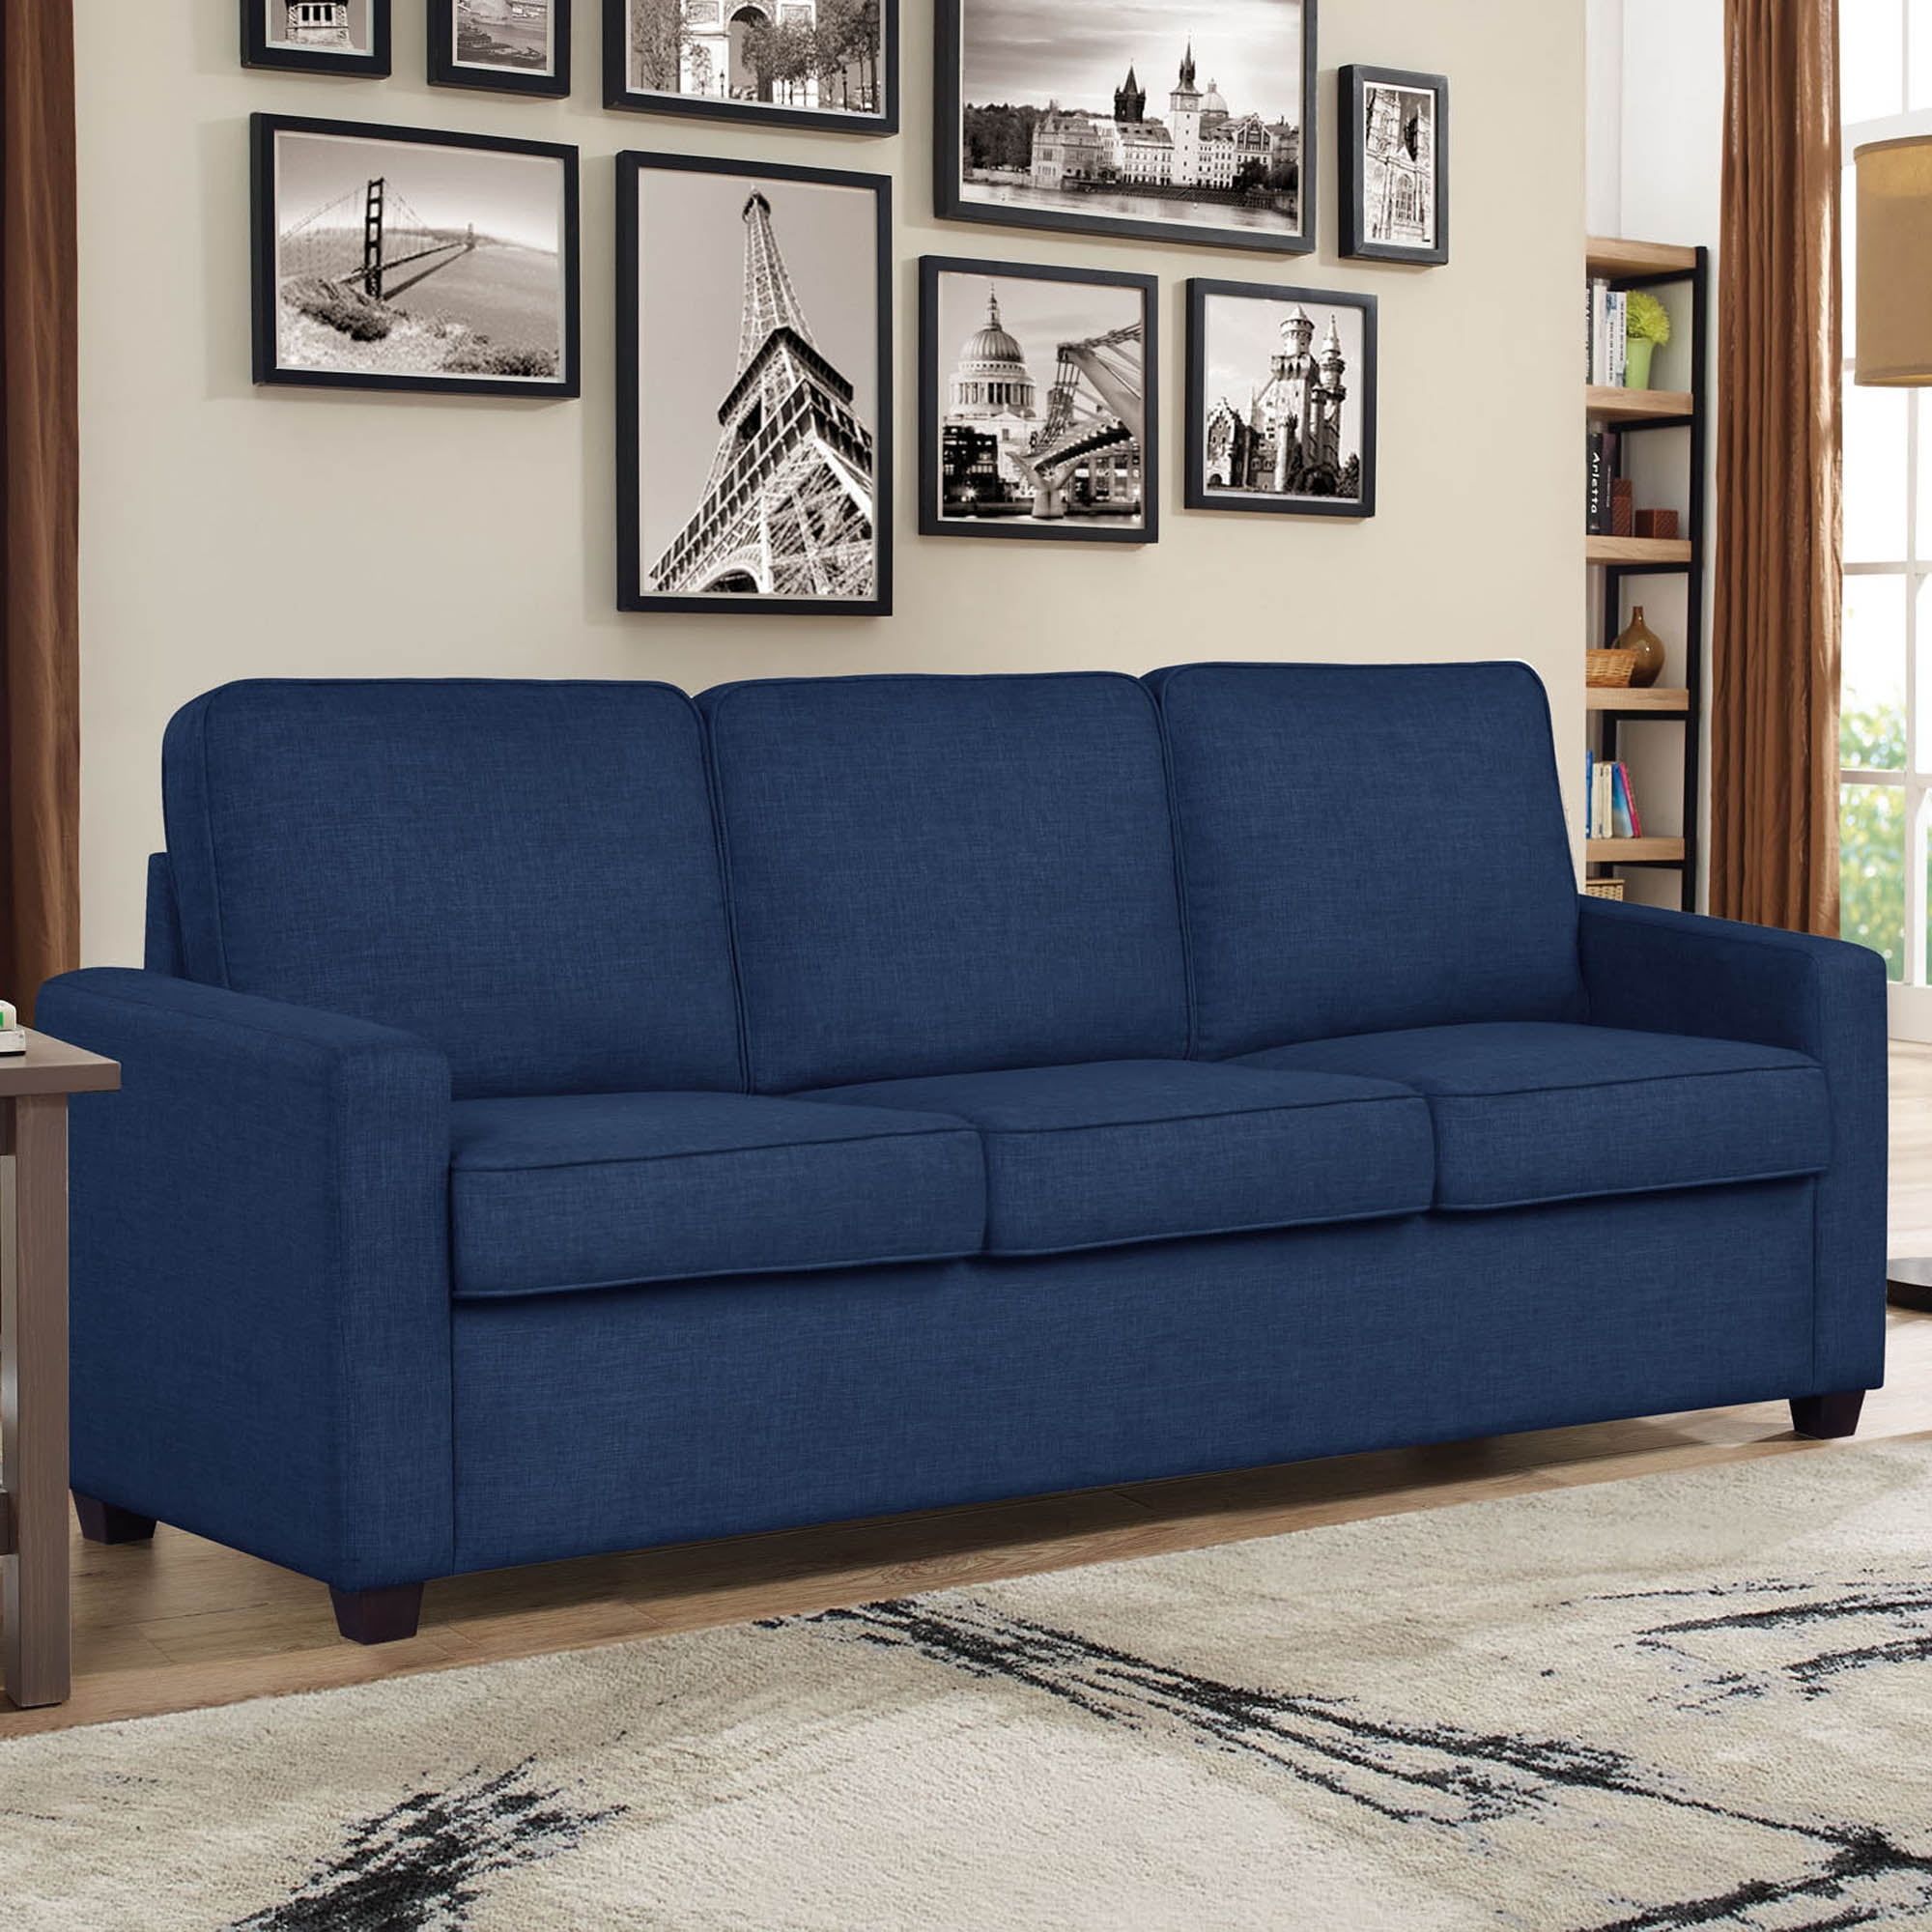 Lifestyle Solutions Jenson Traditional Sofa With Sleeper, Navy Blue Fabric  – Walmart Regarding Navy Sleeper Sofa Couches (Photo 1 of 15)